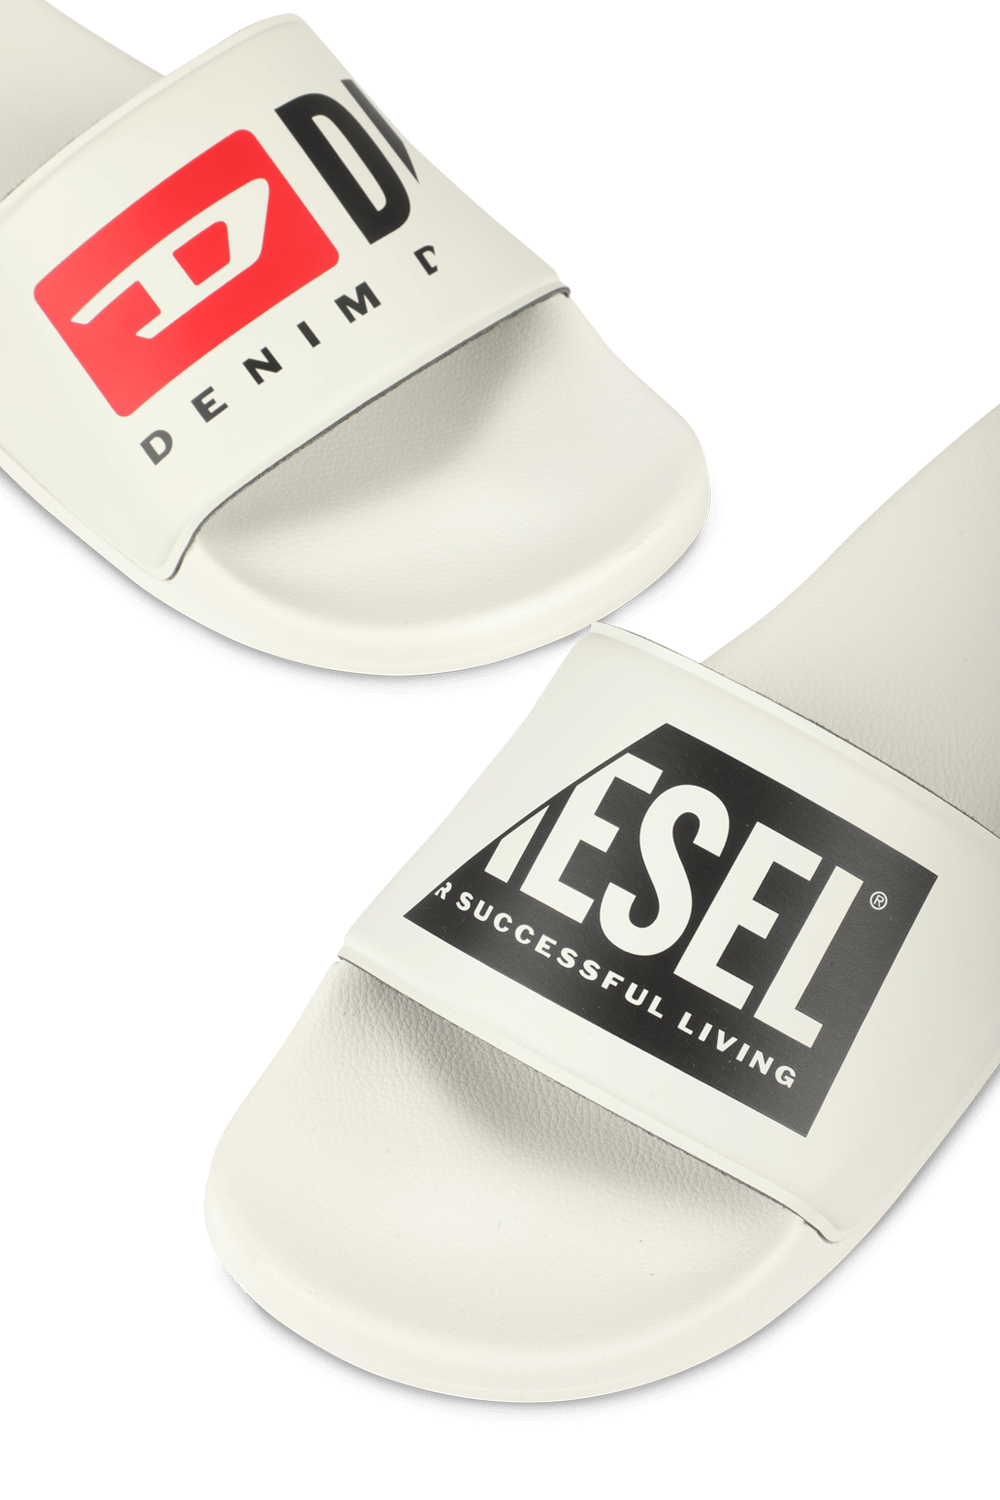 Split Logo Sliders in White DIESEL